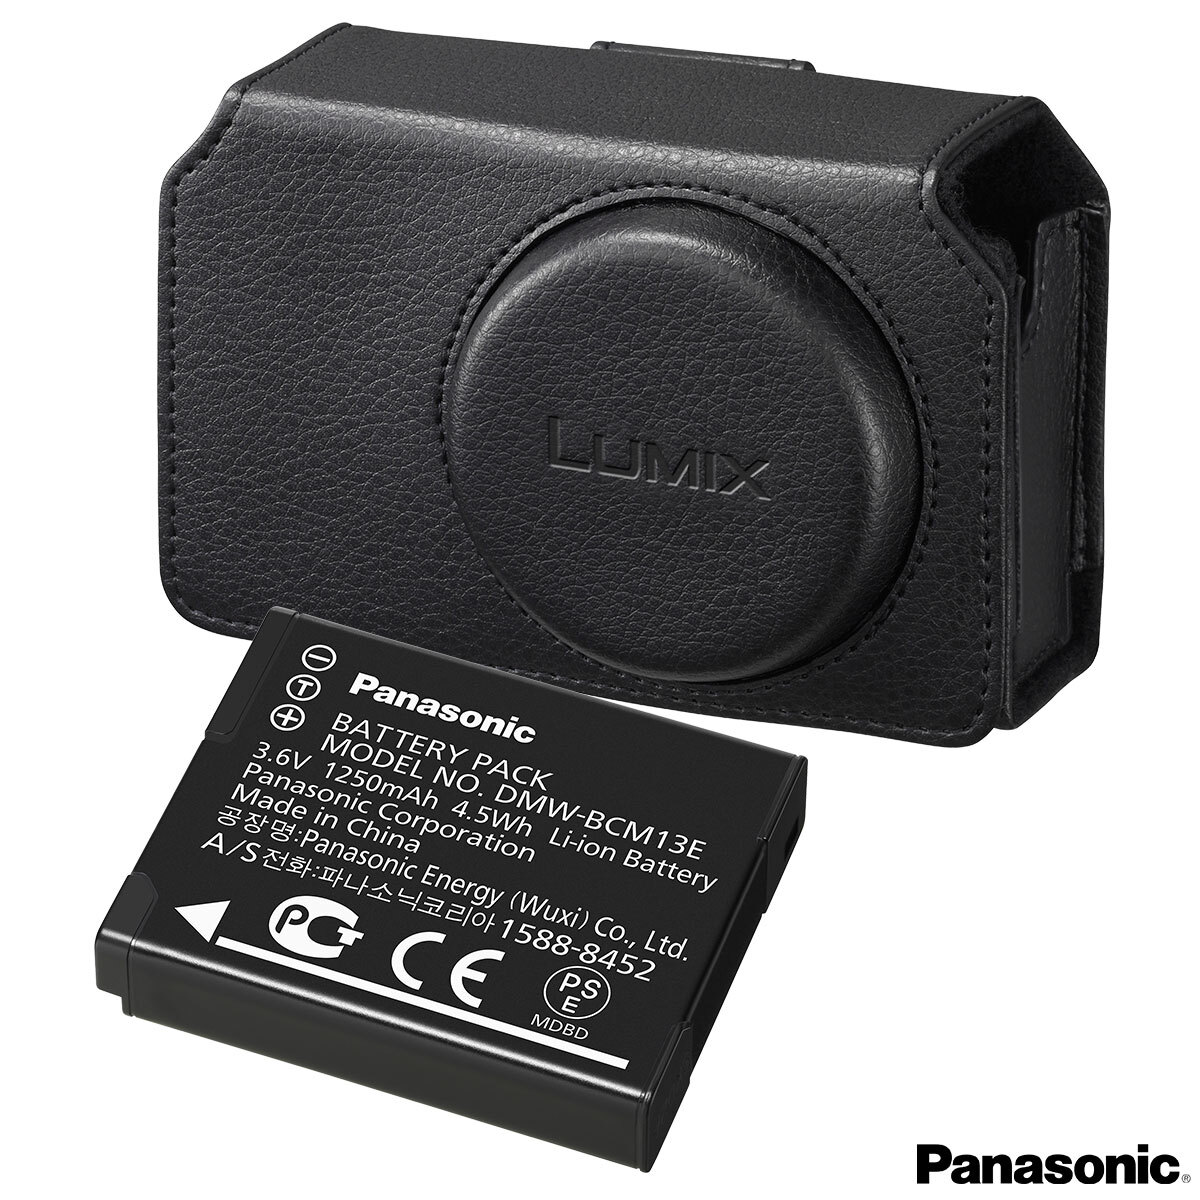 Panasonic Case and Battery kit DMWTZ70KIT